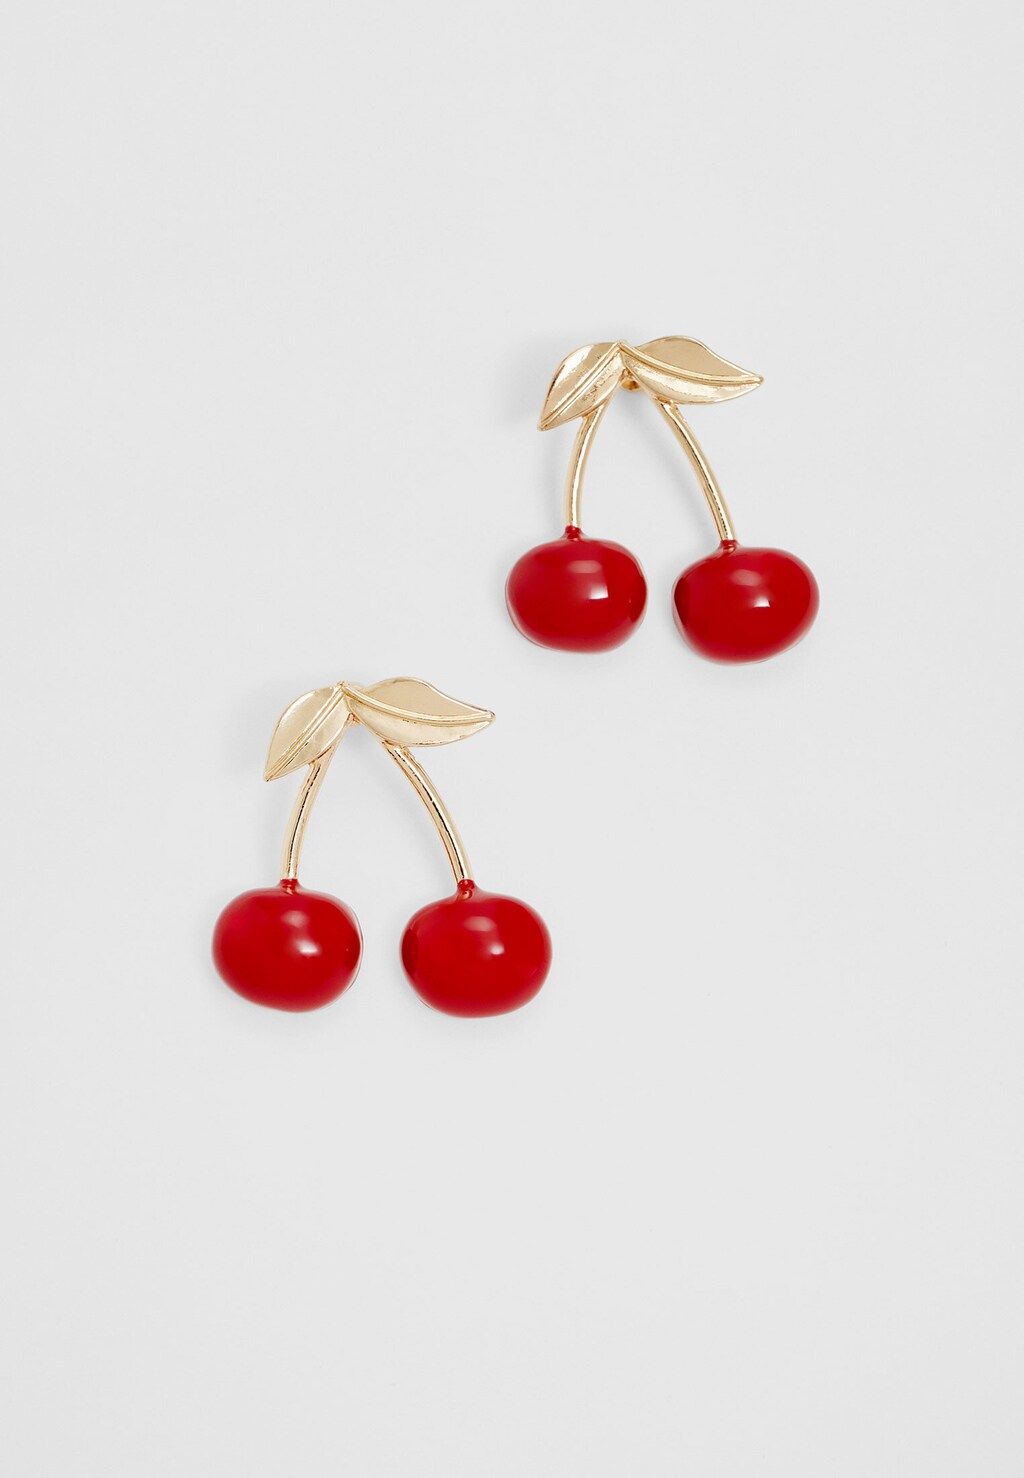 Cherry earrings - Women's Fashion Jewellery | Stradivarius United Kingdom | Stradivarius (UK)